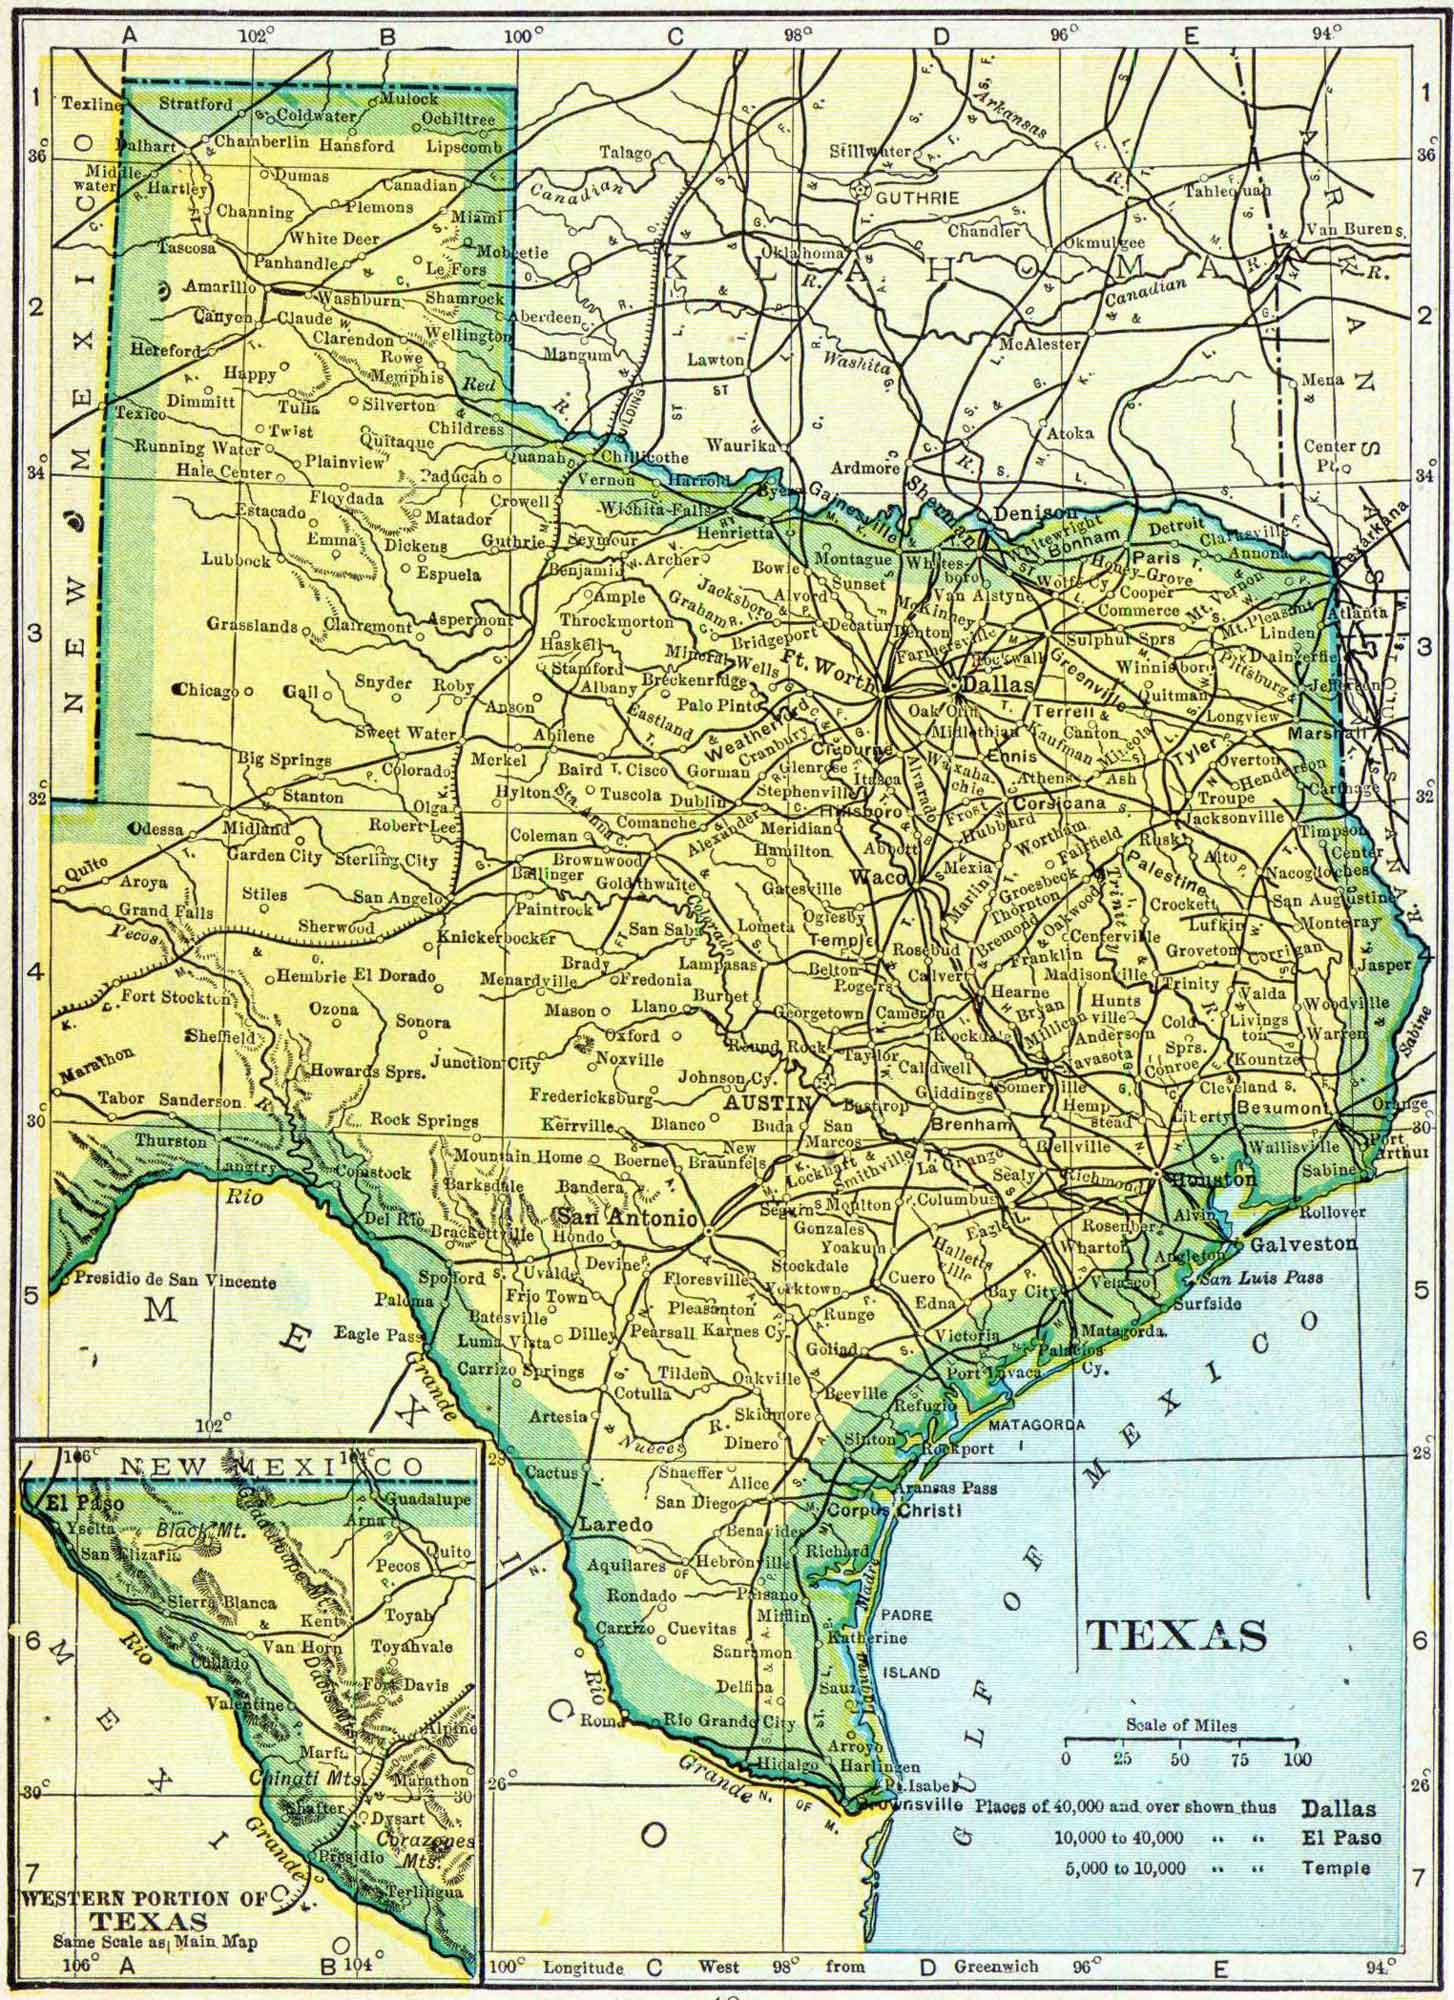 1910 Texas Census Map | Access Genealogy - Map Records Dallas County Texas